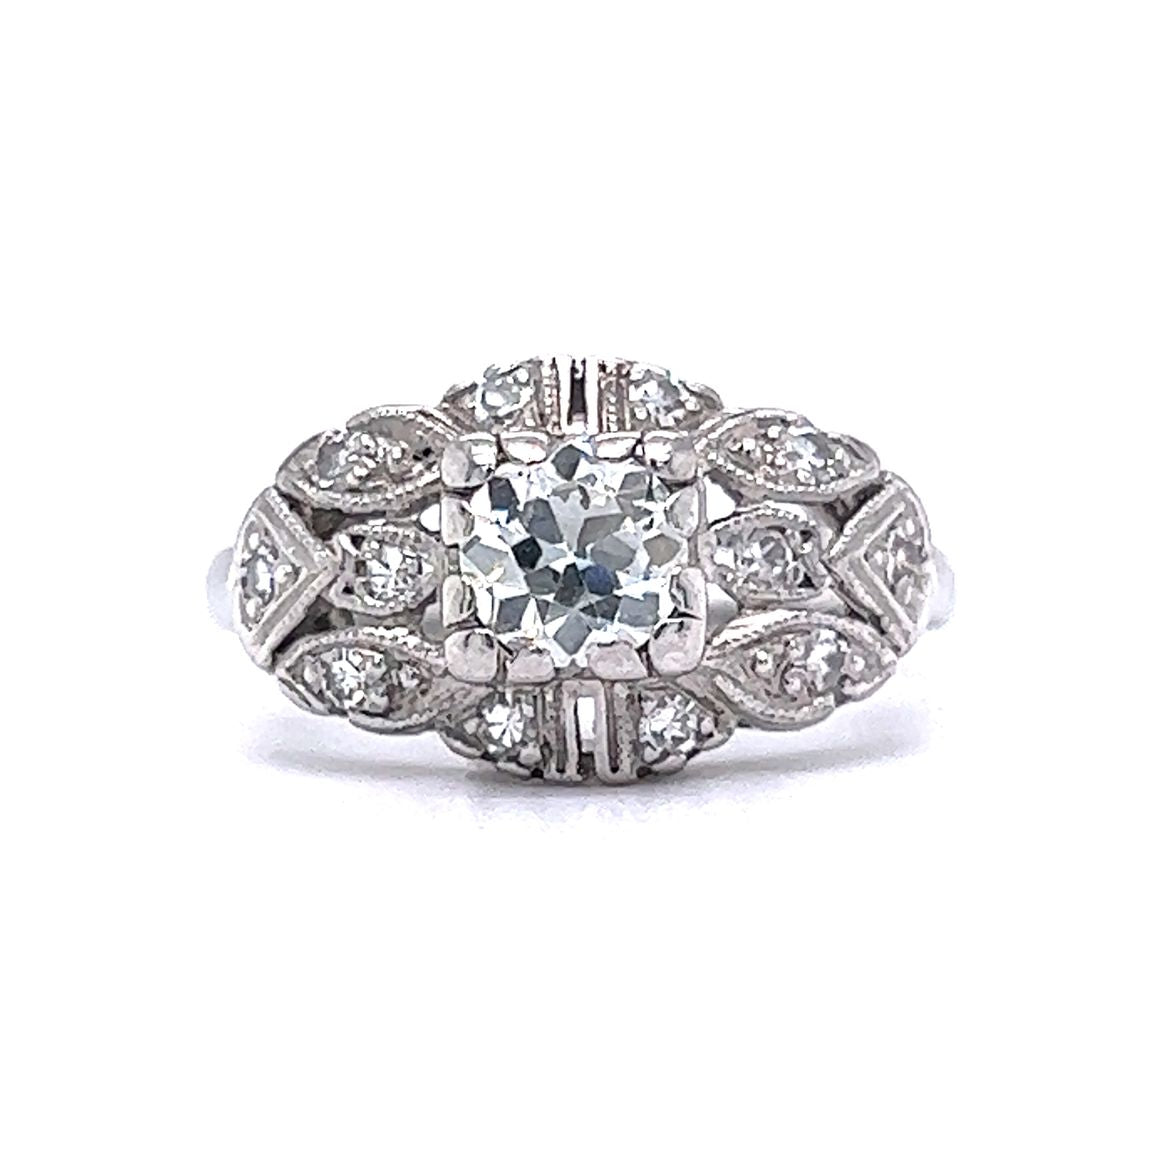 Platinum Vintage Diamond Ring - Shahin Jewelry - Vintage & Antique Jewelry